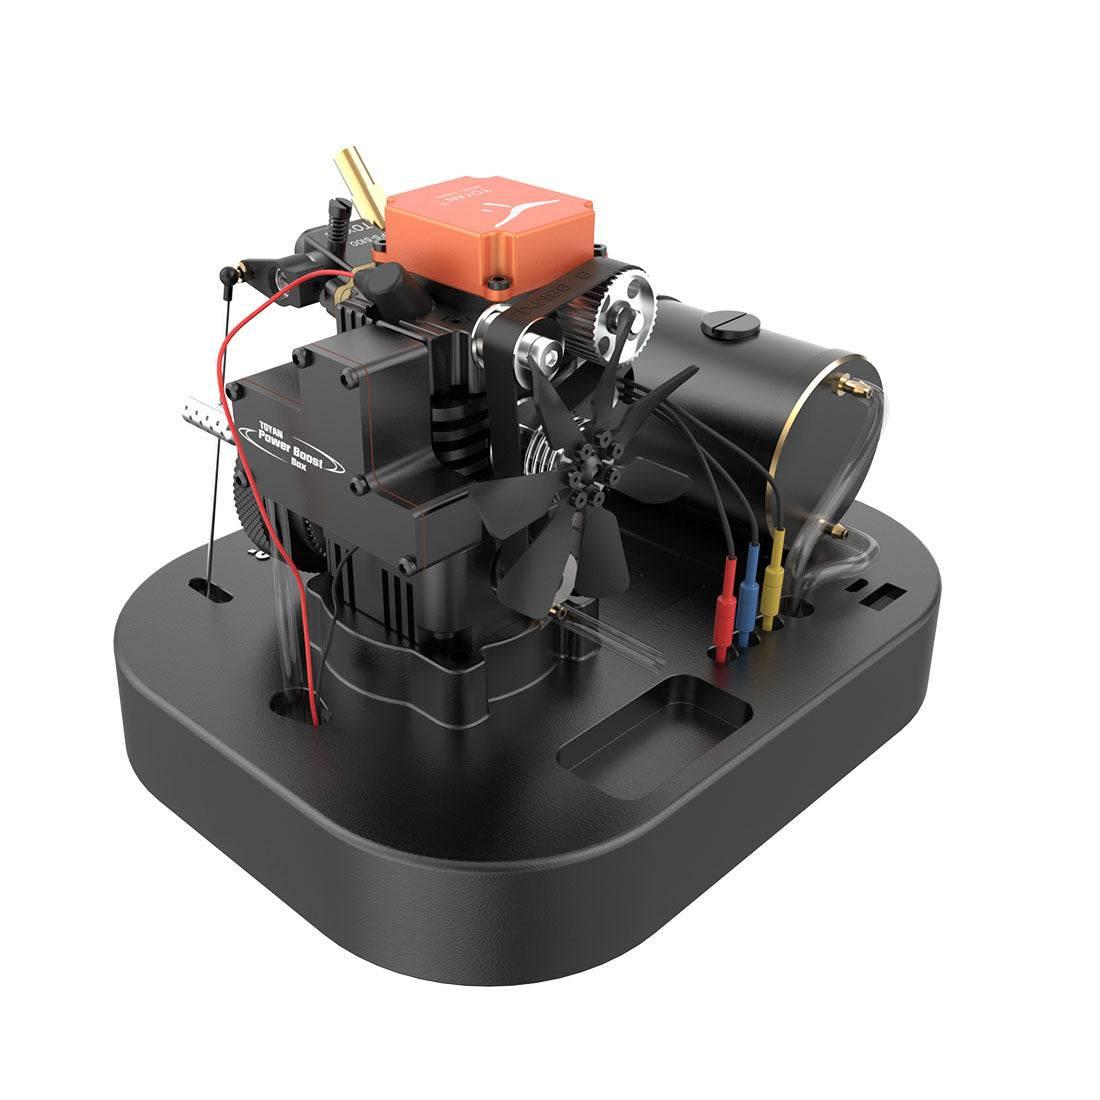 Toyan Mini Engine: Proper Maintenance Tips for Your Toyan Mini Engine